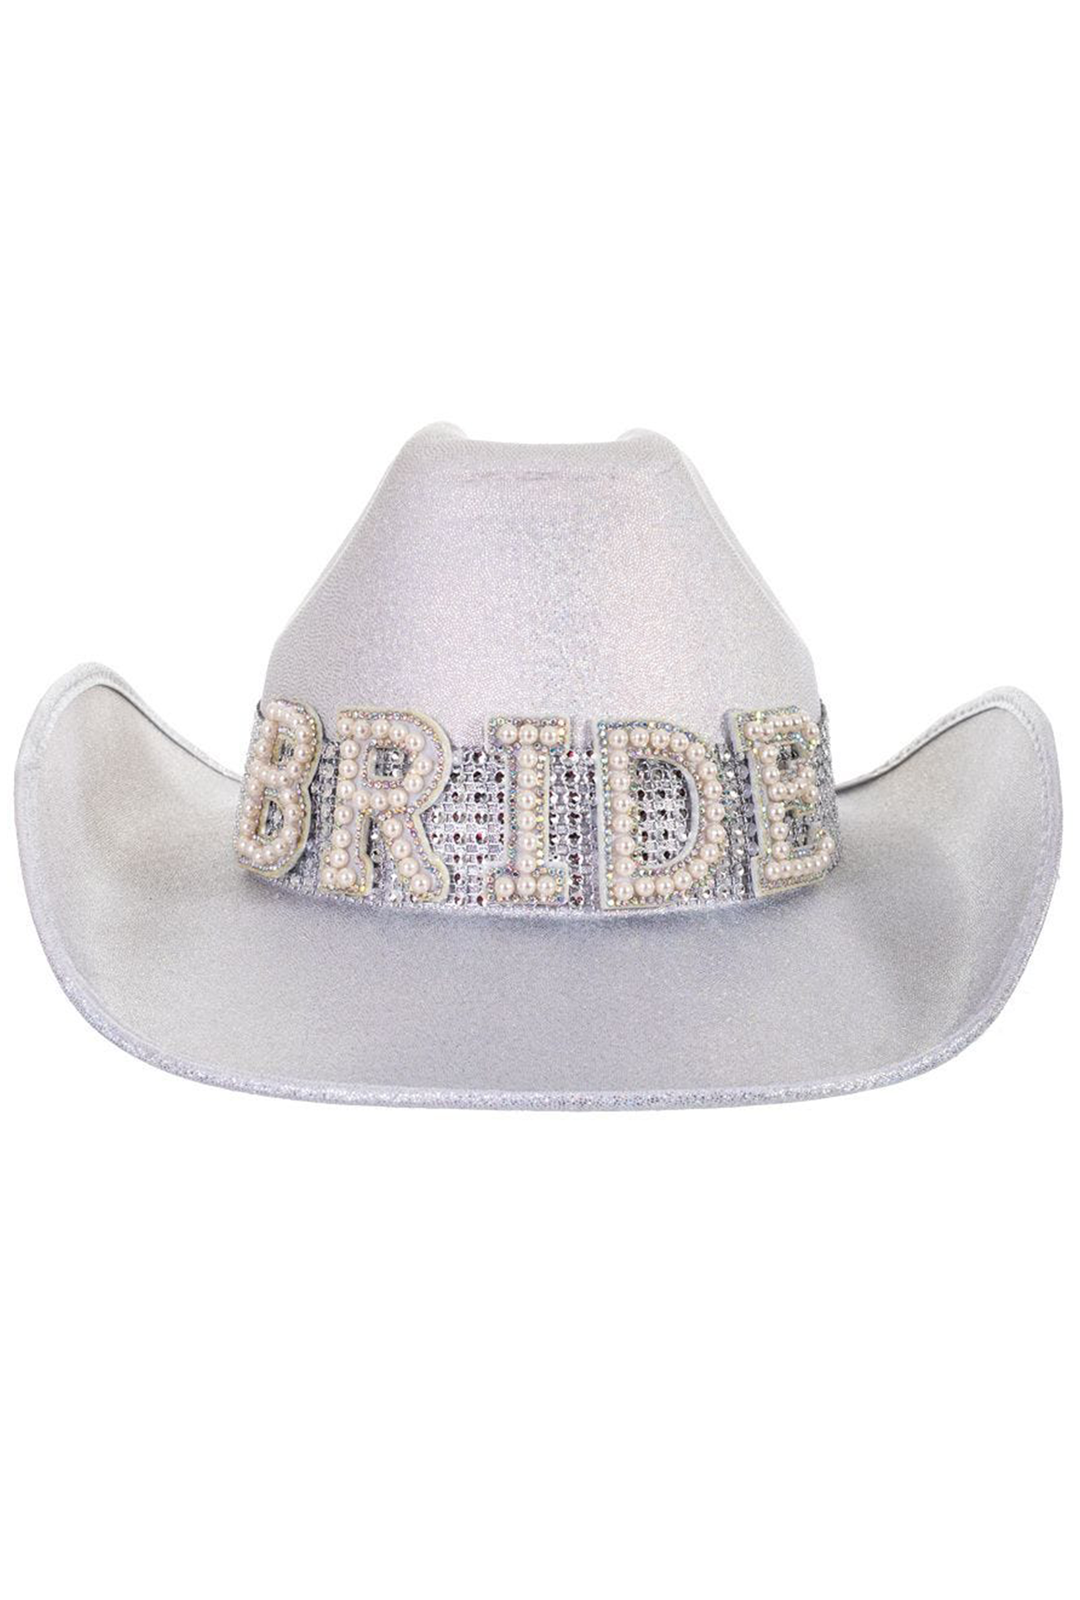 Shimmer Silver Bride Cowboy Hat